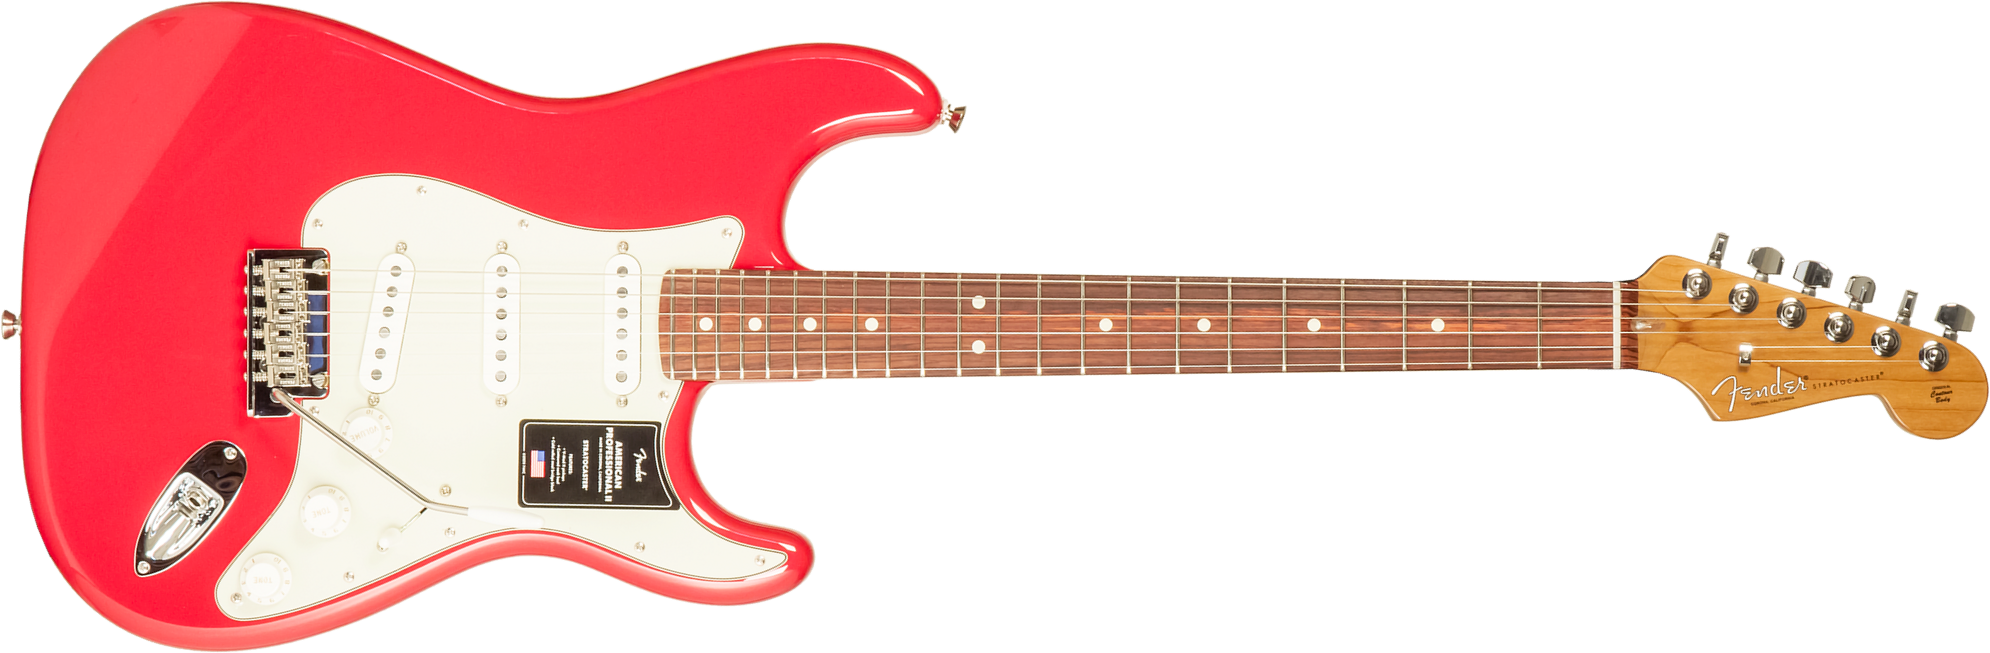 Fender Strat American Professional Ii Ltd Usa 3s Trem Rw - Fiesta Red - Str shape electric guitar - Main picture